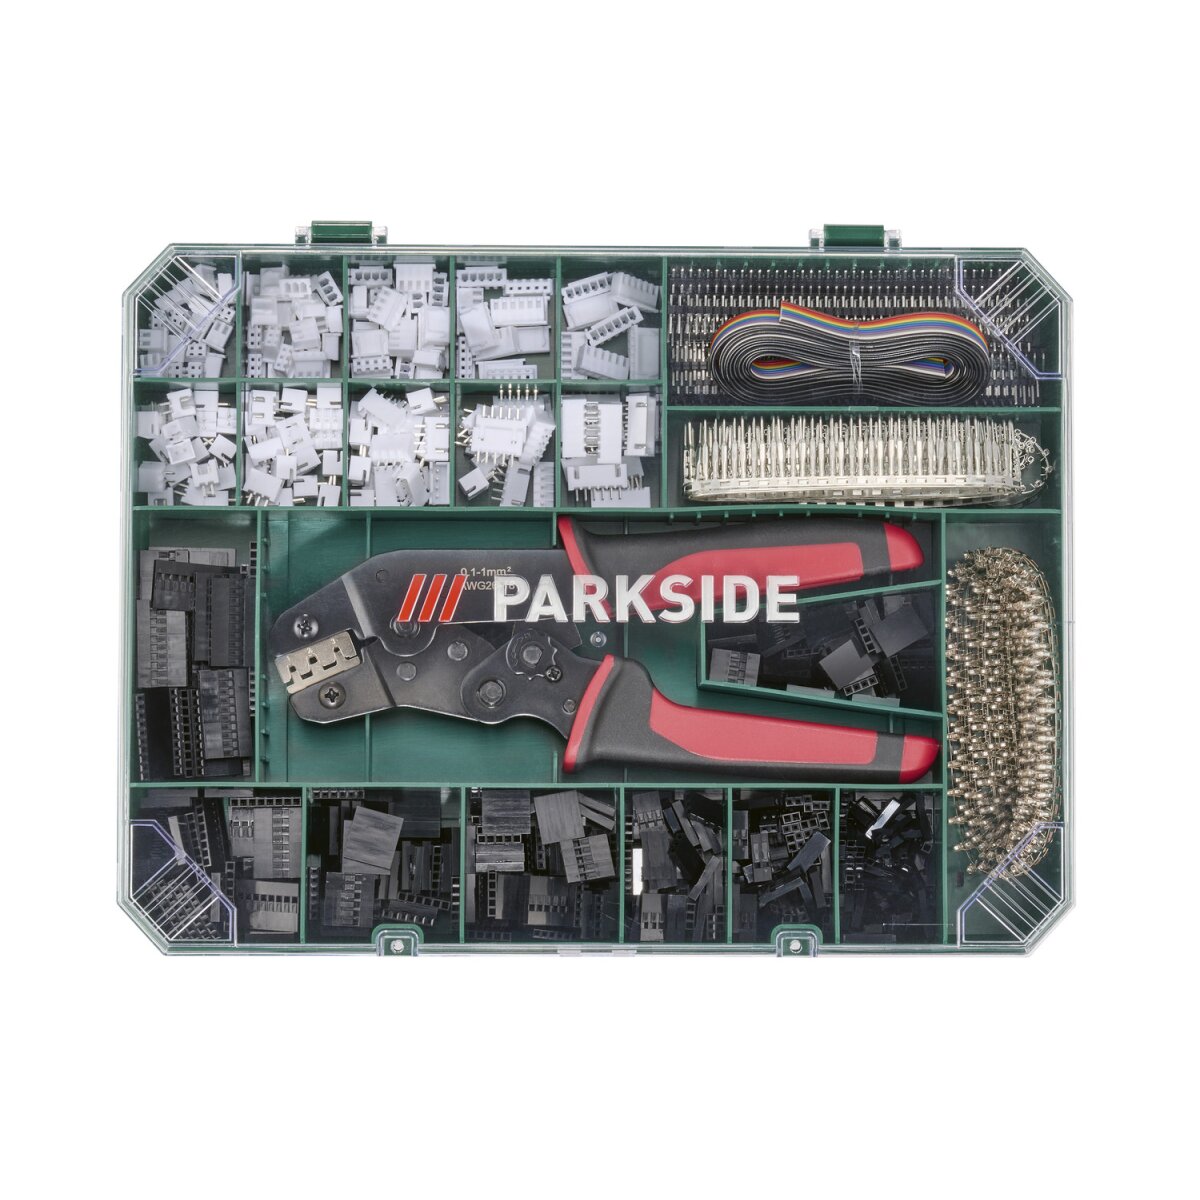 PARKSIDE® Crimpzangen-Set, 2012-teilig - B-Ware neuwertig, 24,99 €